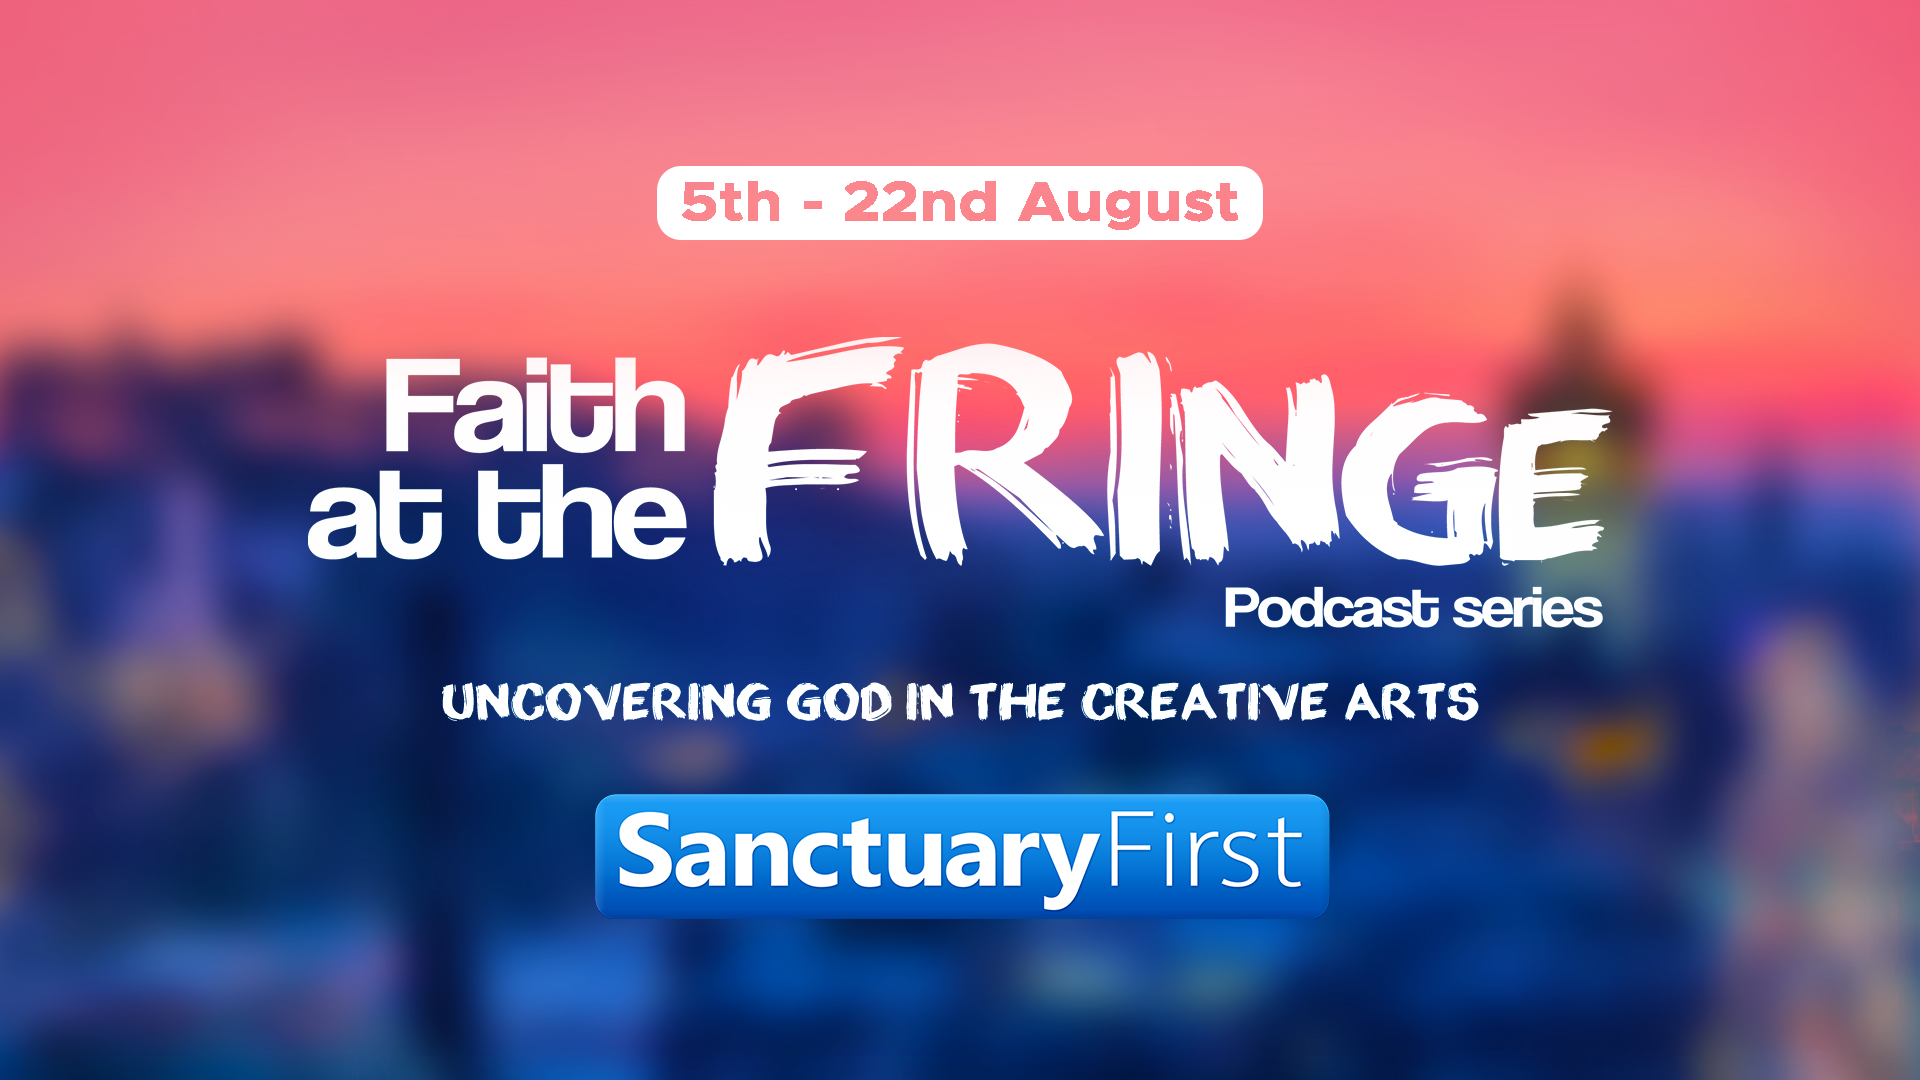 Faith at the Fringe Podcasts!